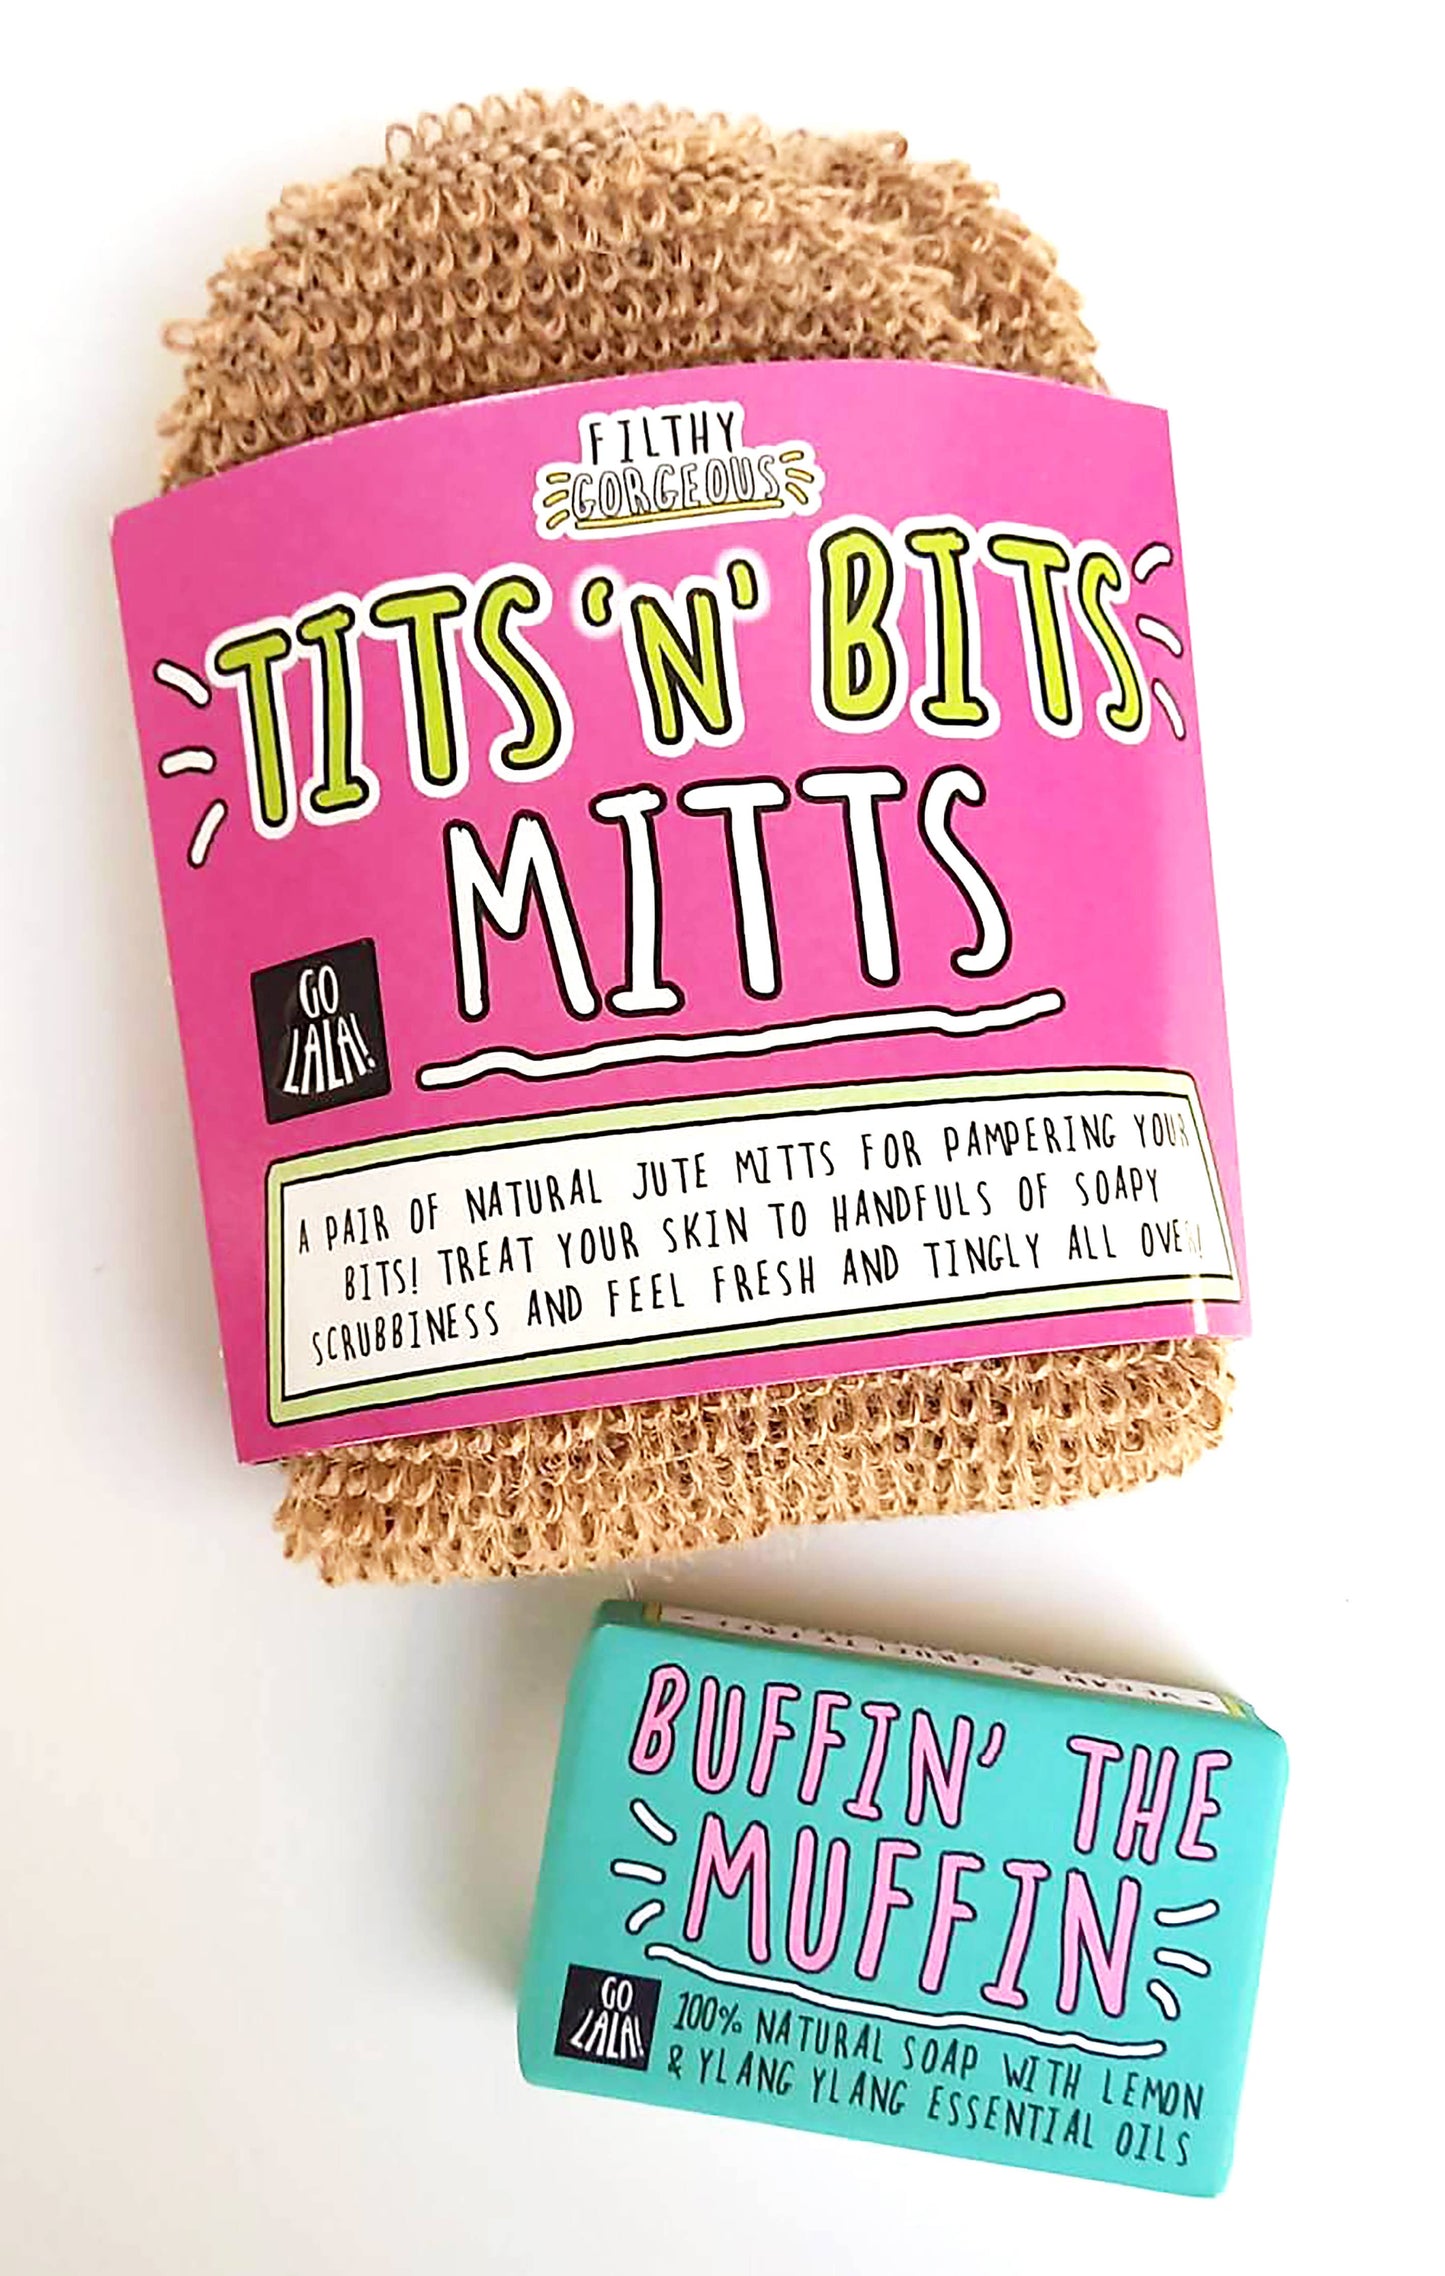 Tits 'n' Bits Mitts - Natural Jute Bath Mitts